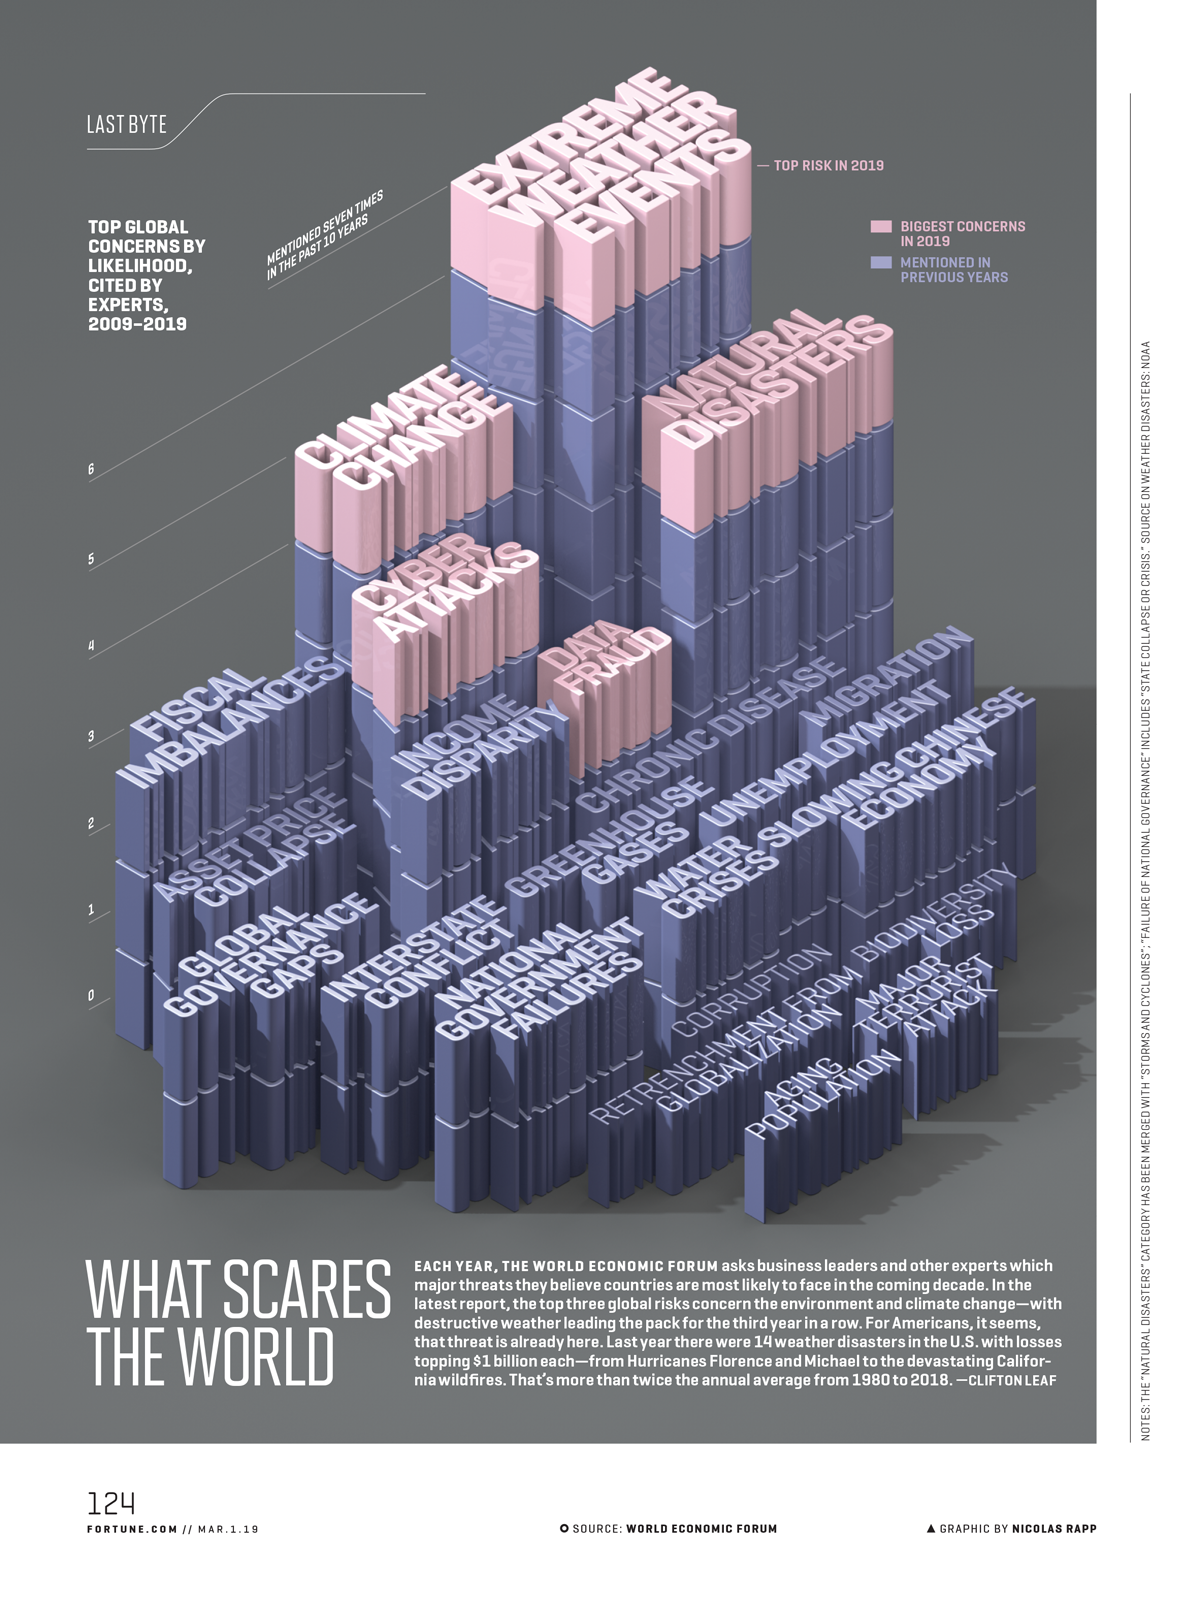 What Scares the World - Nicolas Rapp Infographic Design Studio - Freelance Designer